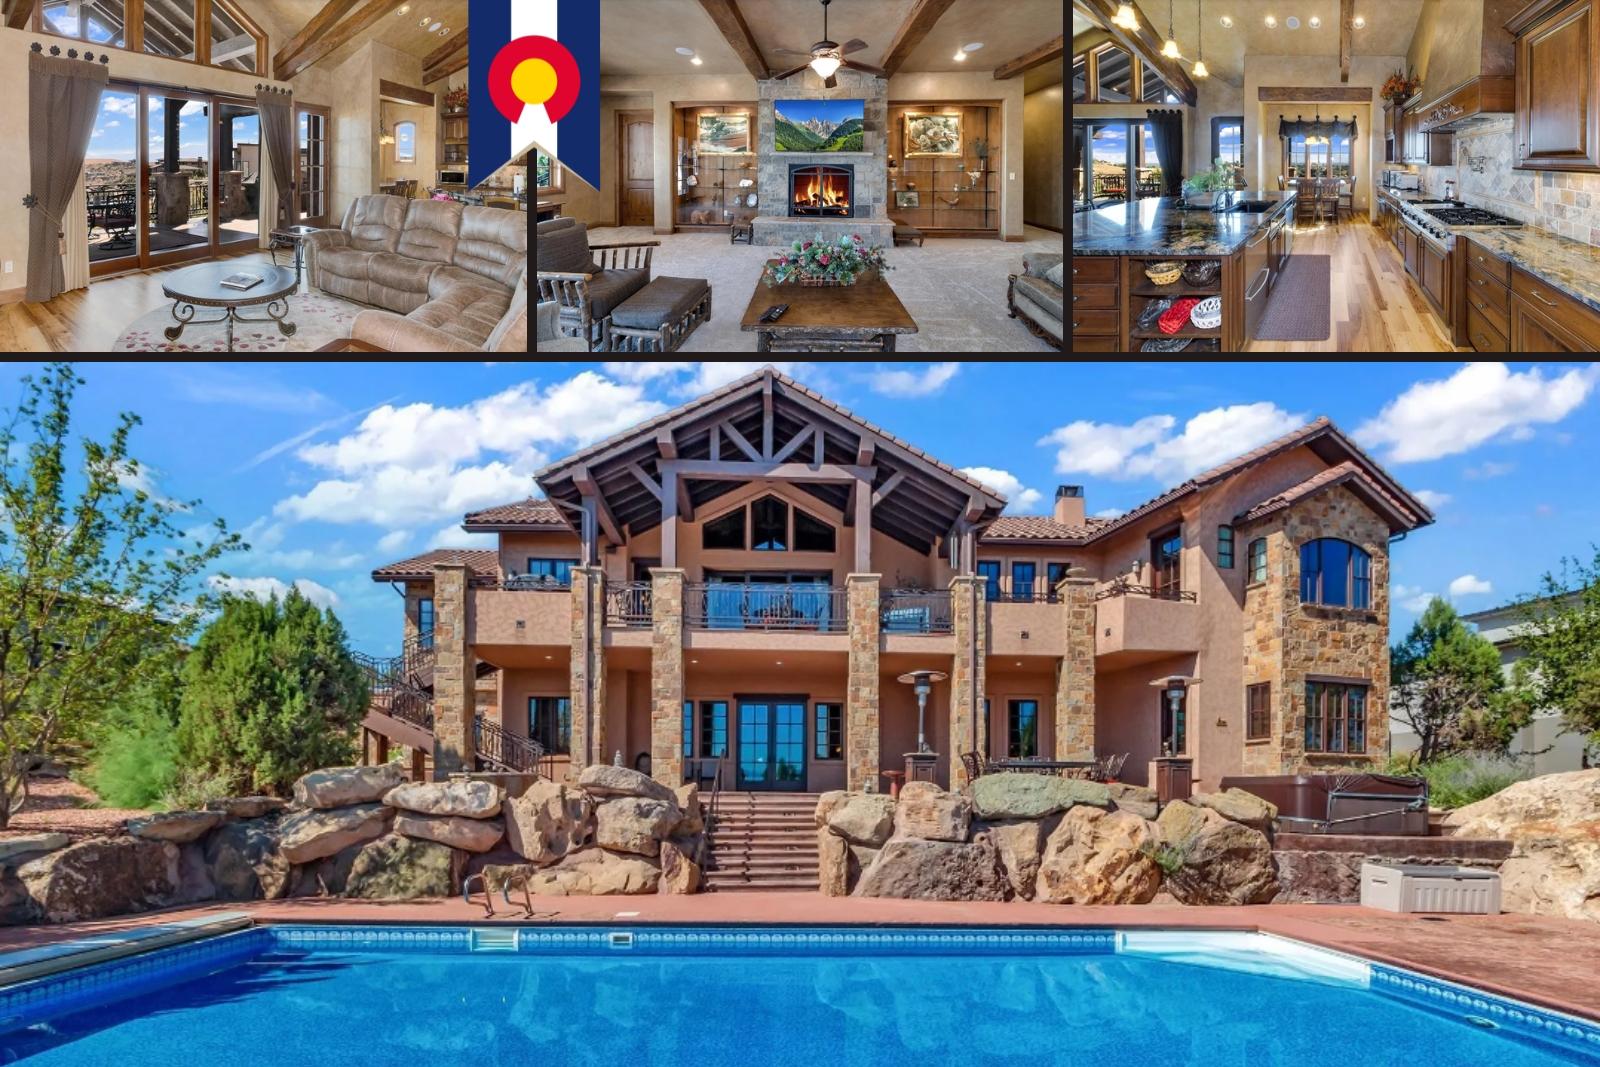 Custom - Built Colorado Dream Home With Pool In Redlands Mesa